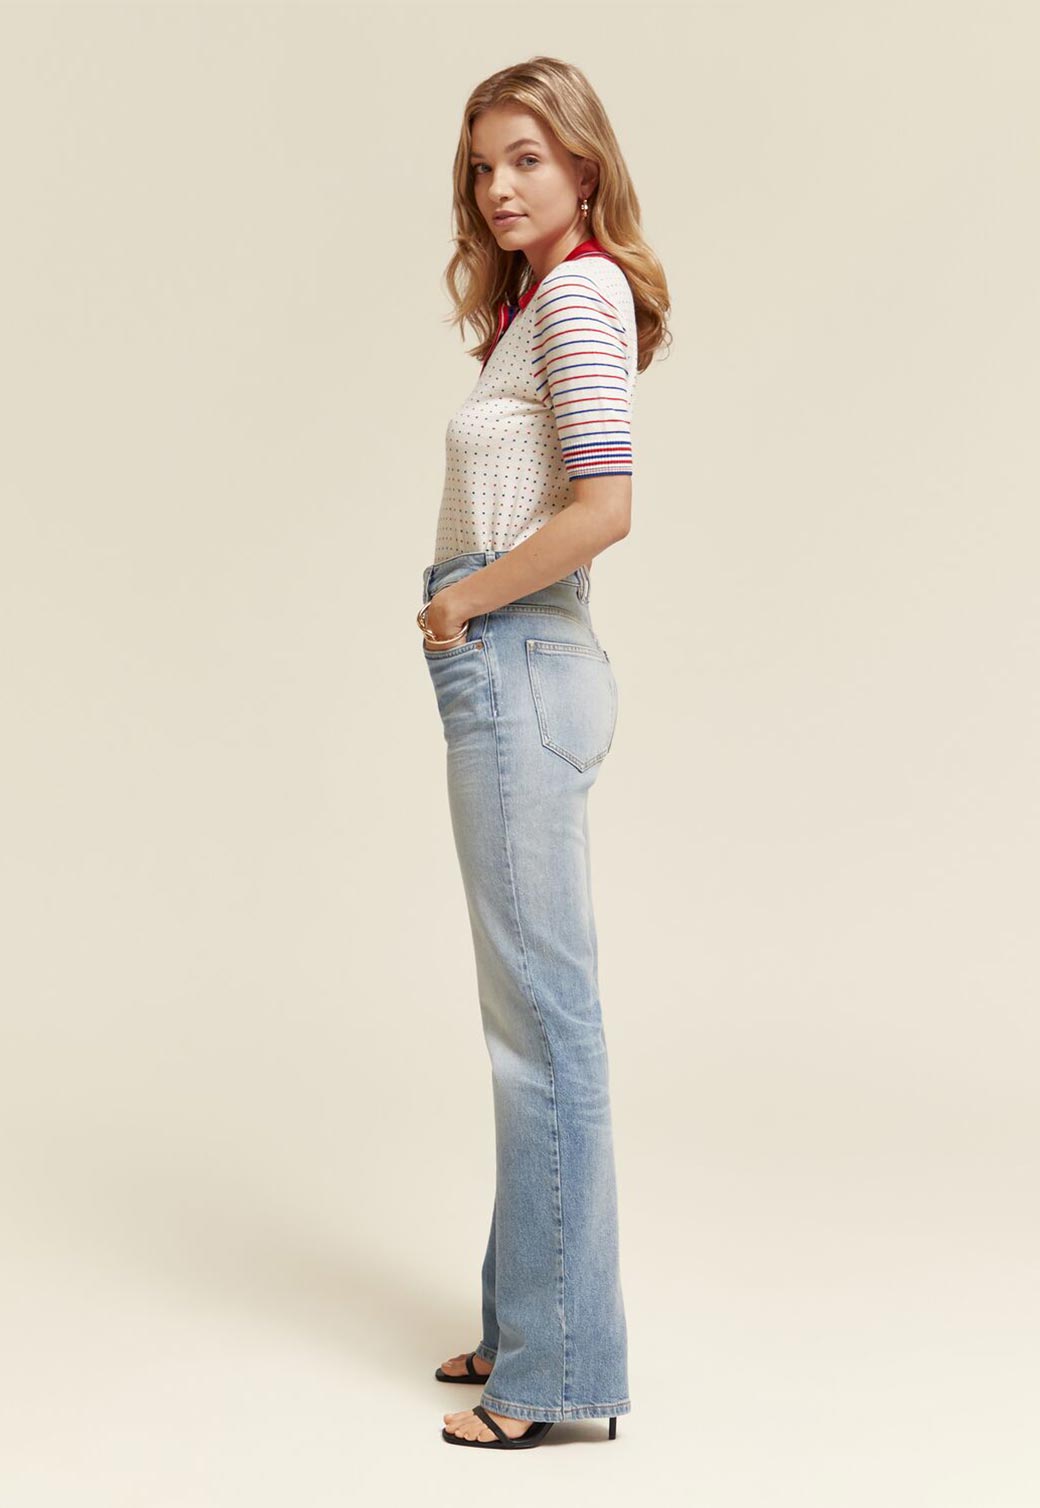 Light Gray ג'ינס ארוך לנשים The Glow SCOTCH & SODA